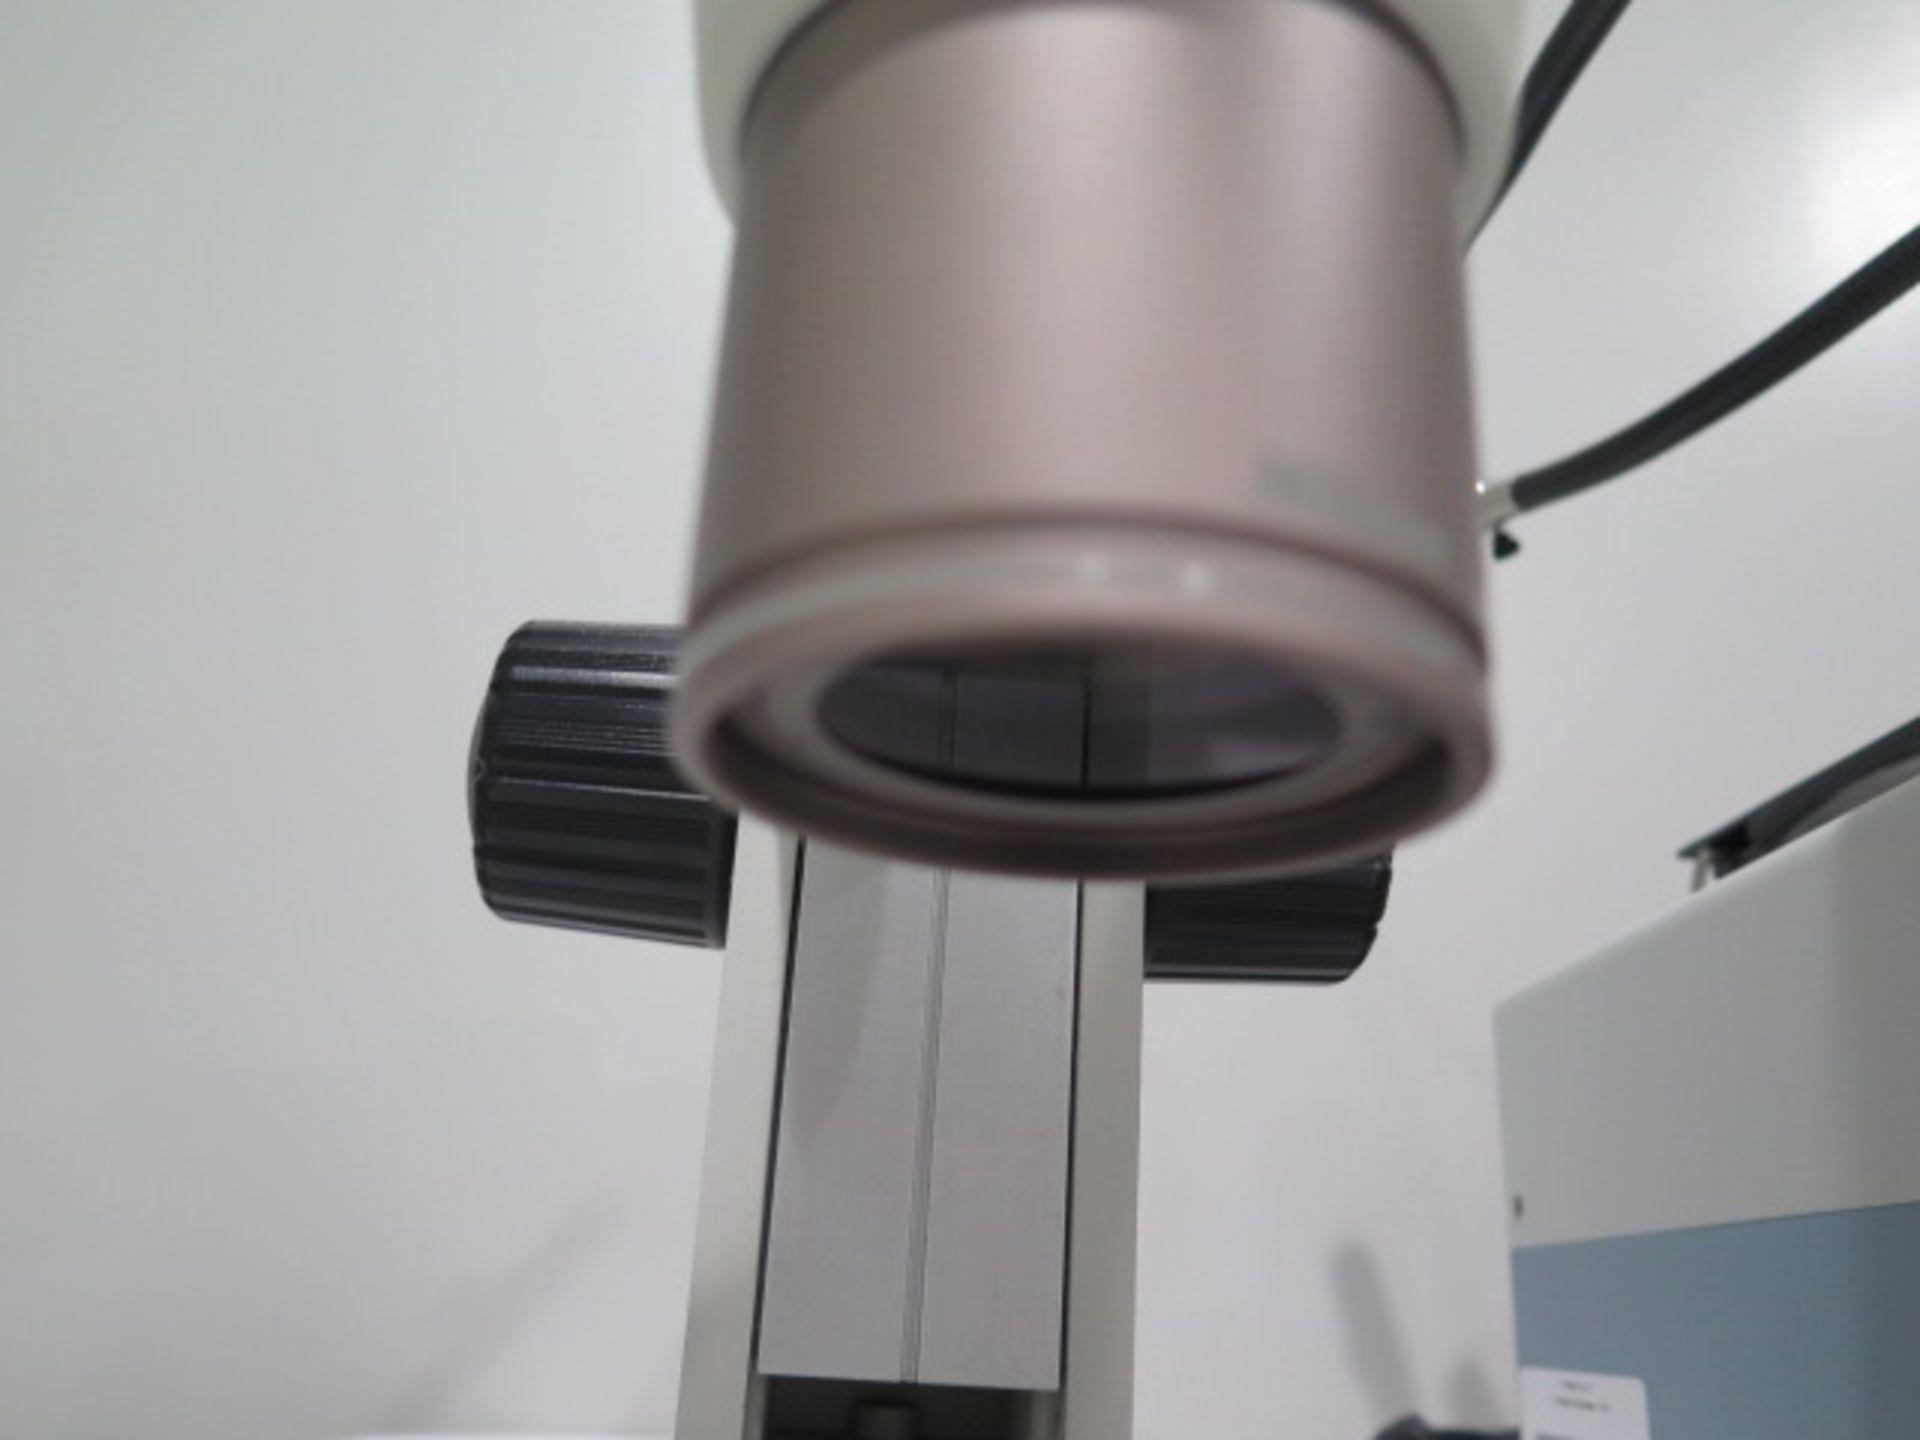 Nikon SMZ800 Monocular Microscope w/ Phototube Video Splitter Port (NO CAMERA), A.G. Heinze Dyna - Image 6 of 10